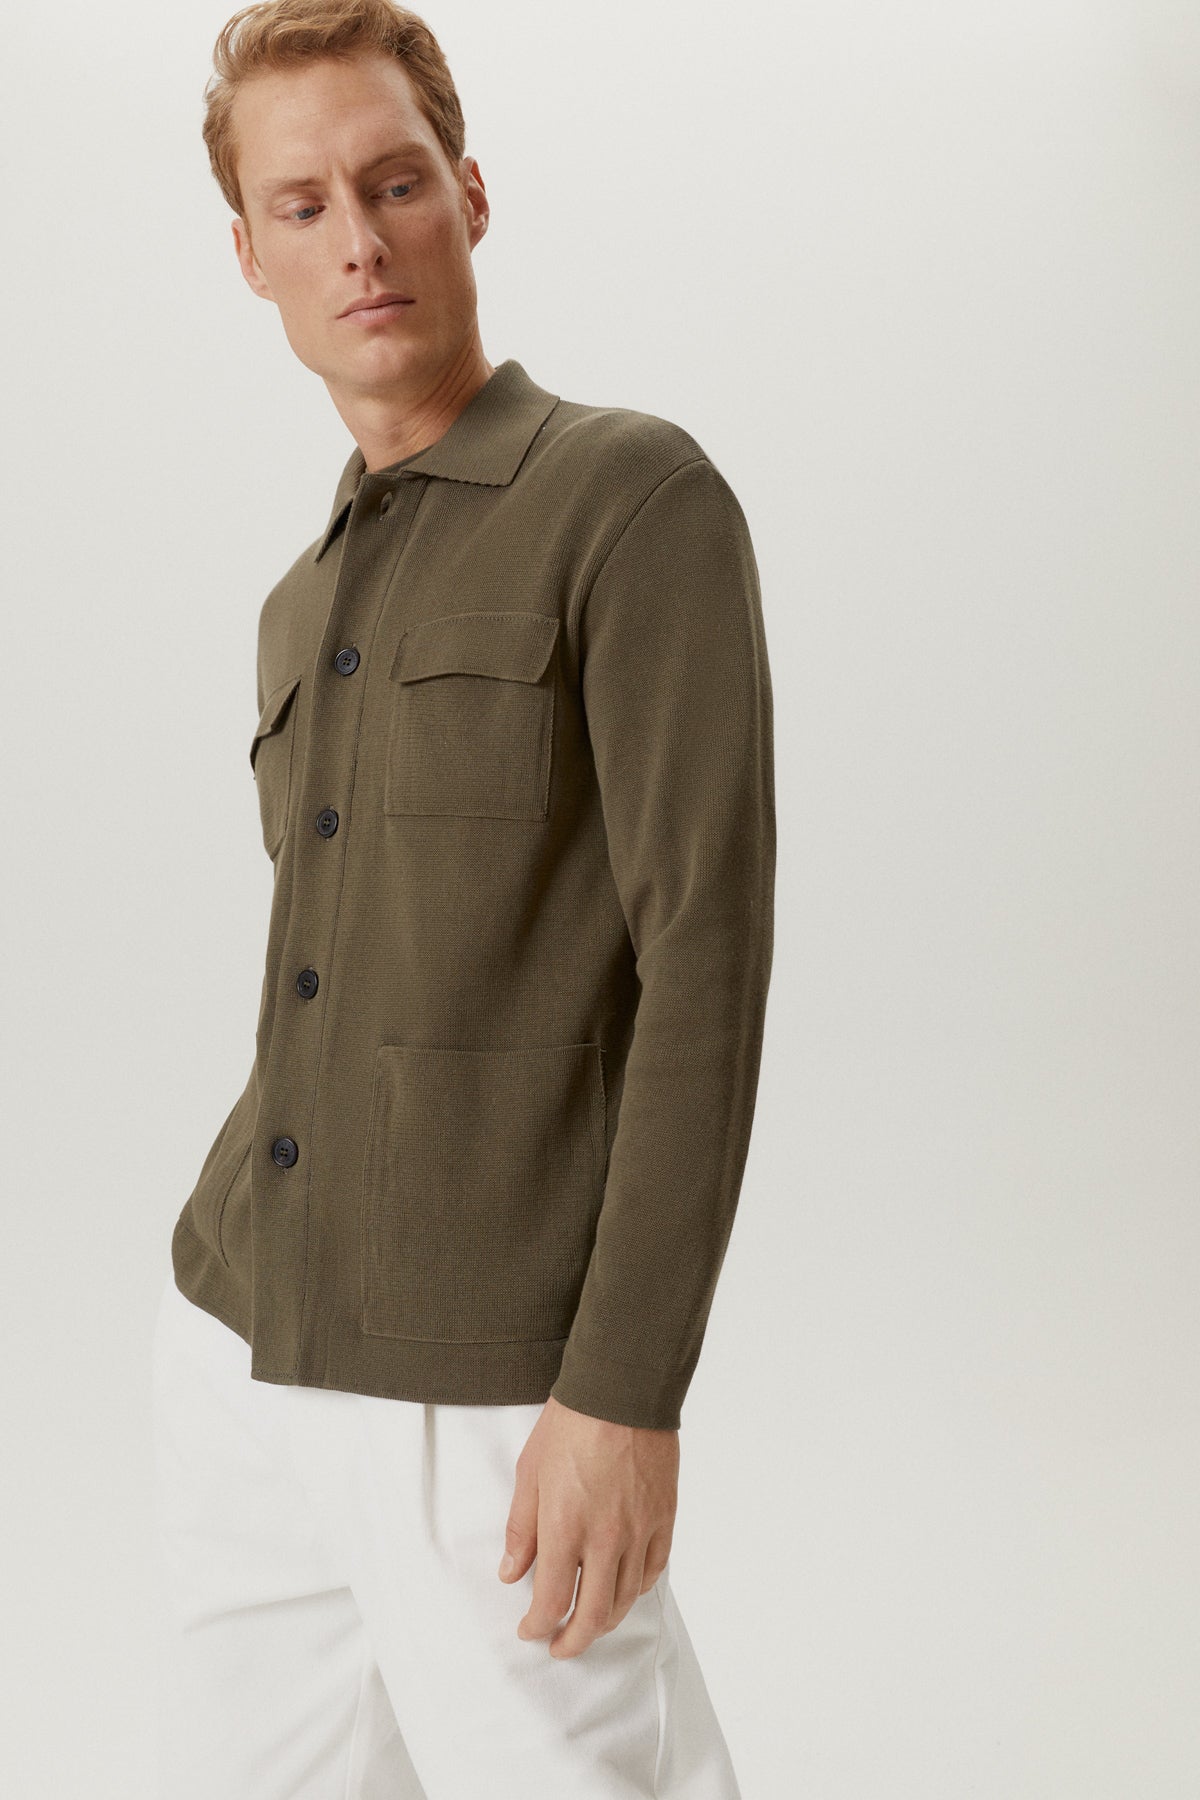 Kaki Green | The Organic Cotton Jacket